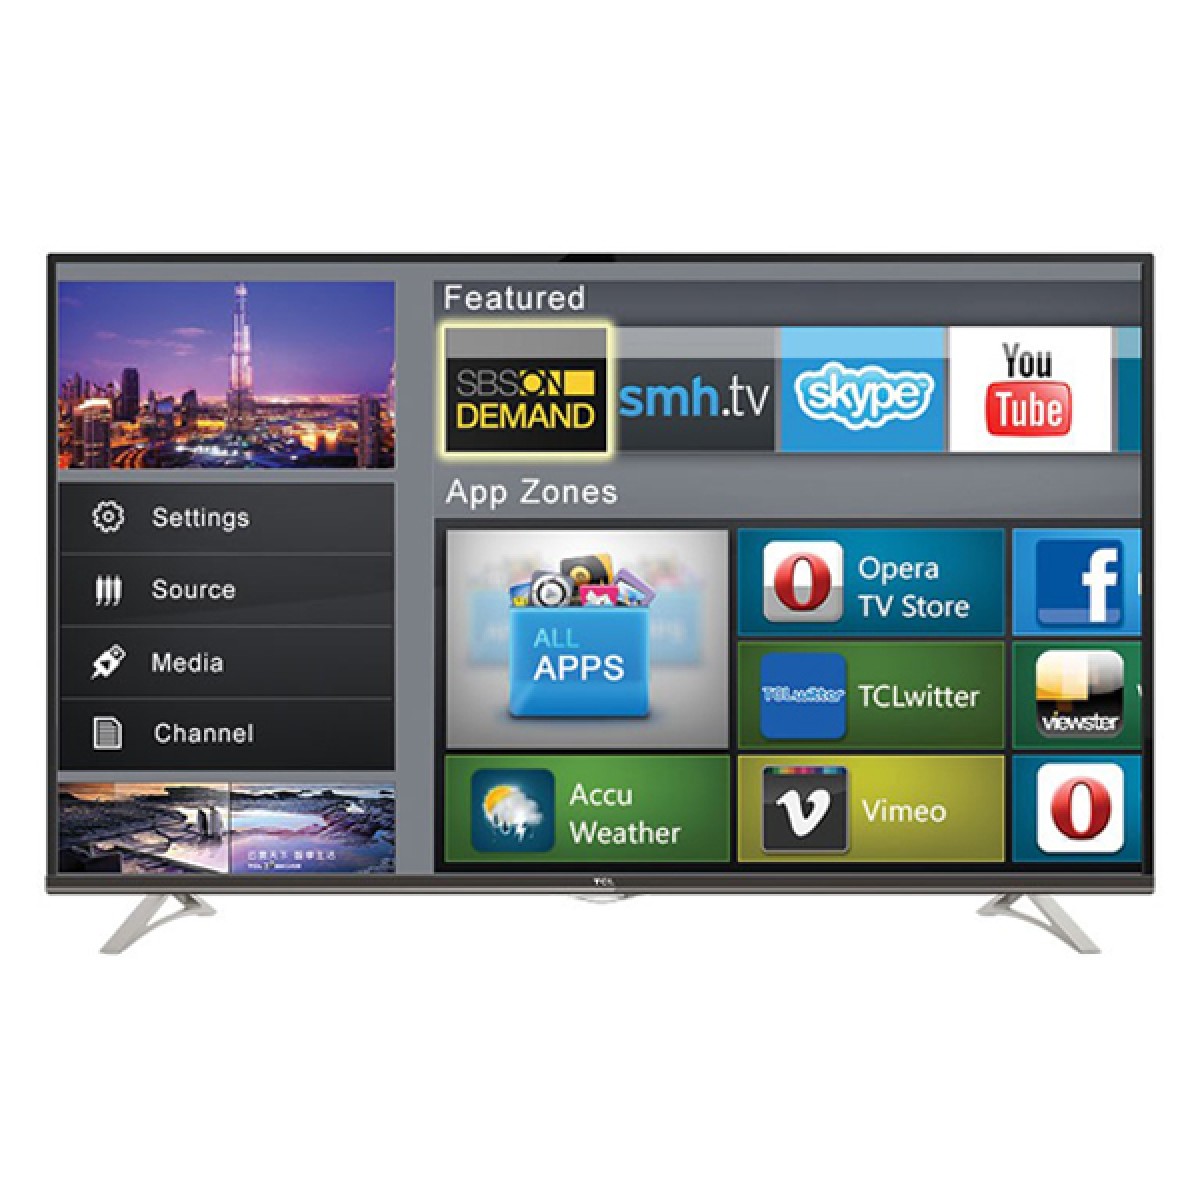 Топ телевизоров на андроид. Телевизор TCL смарт ТВ. Телевизор TCL Android TV. App Store на телевизоре TCL. TCL Smart TV Bundle.